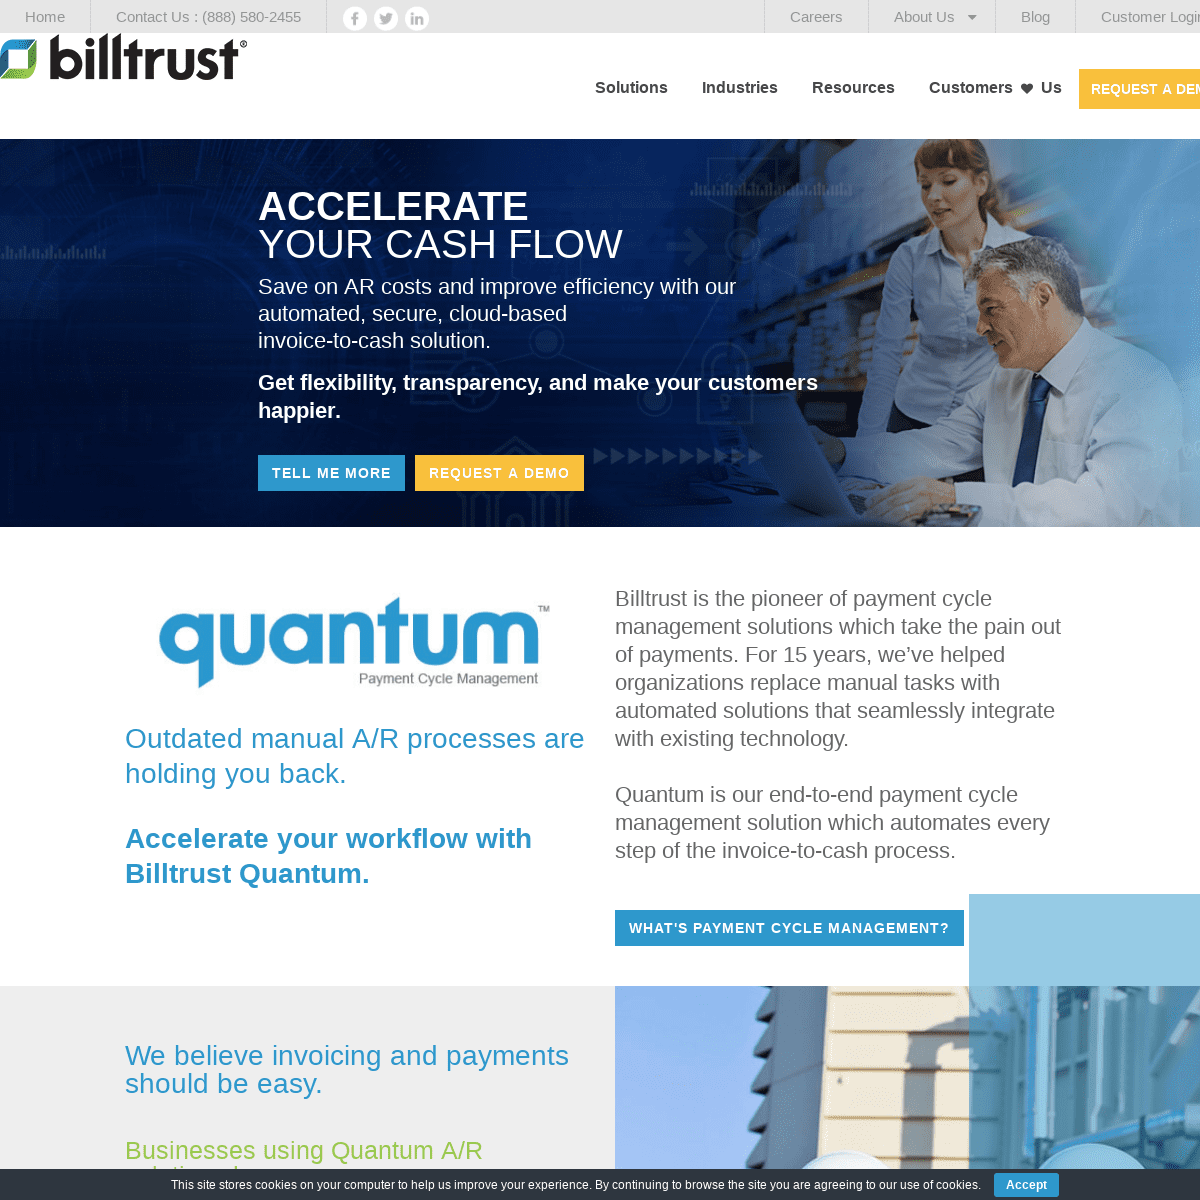 A complete backup of billtrust.com